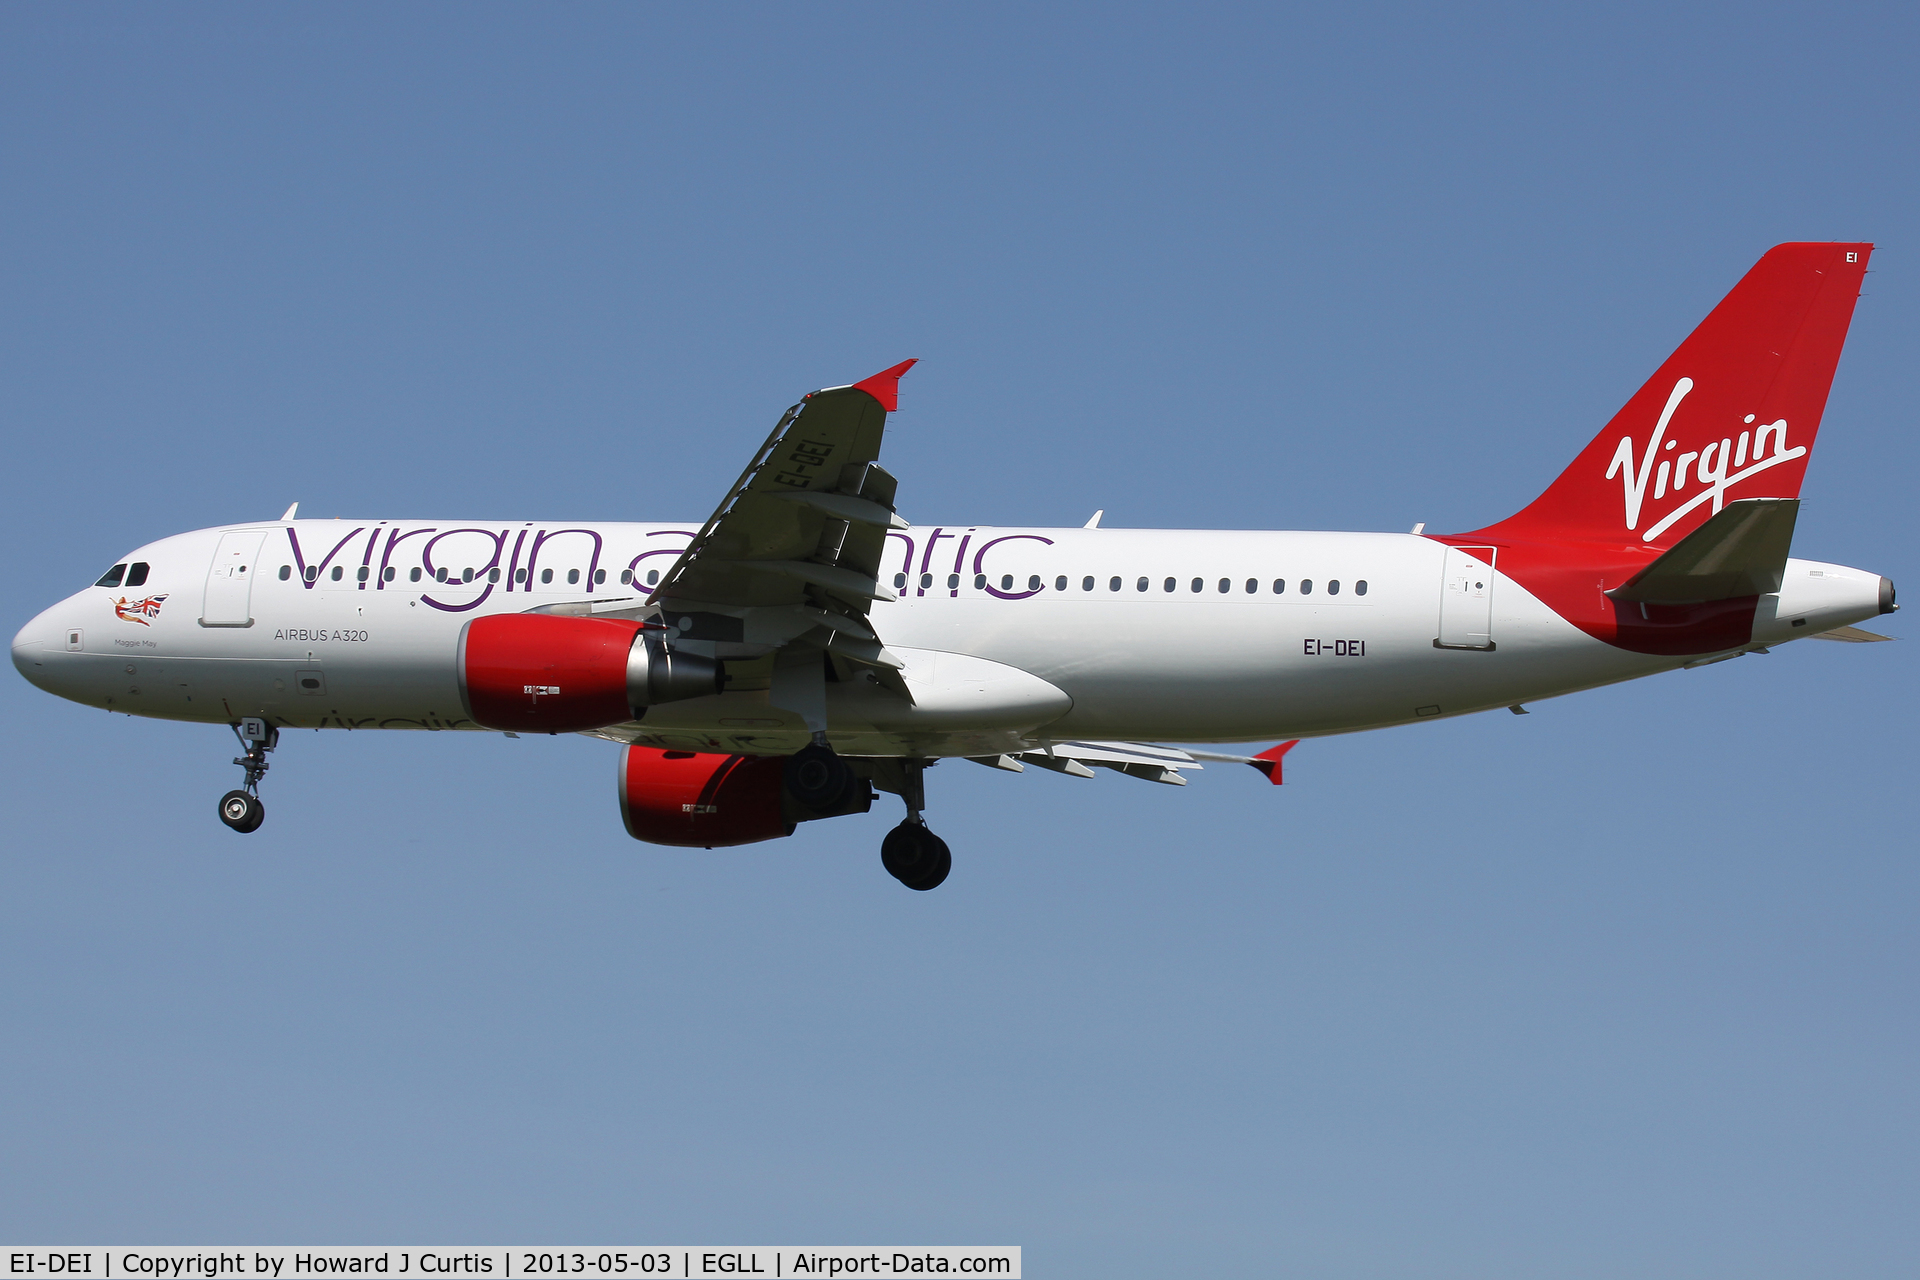 EI-DEI, 2005 Airbus A320-214 C/N 2374, Virgin Atlantic, 'Maggie May'; on approach to runway 27L.